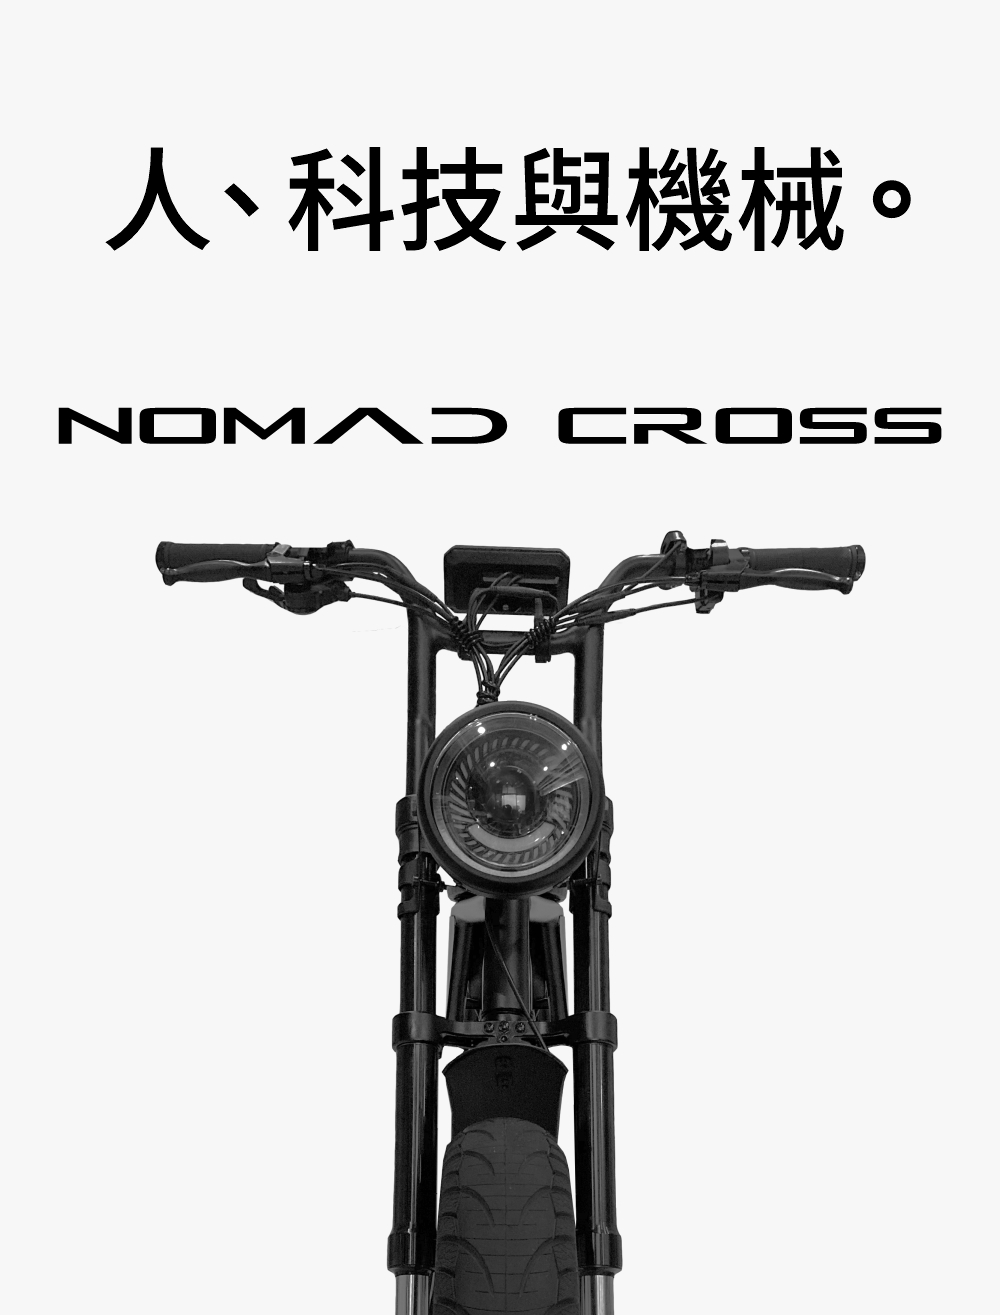 OMVOS Nomad Cross full edition